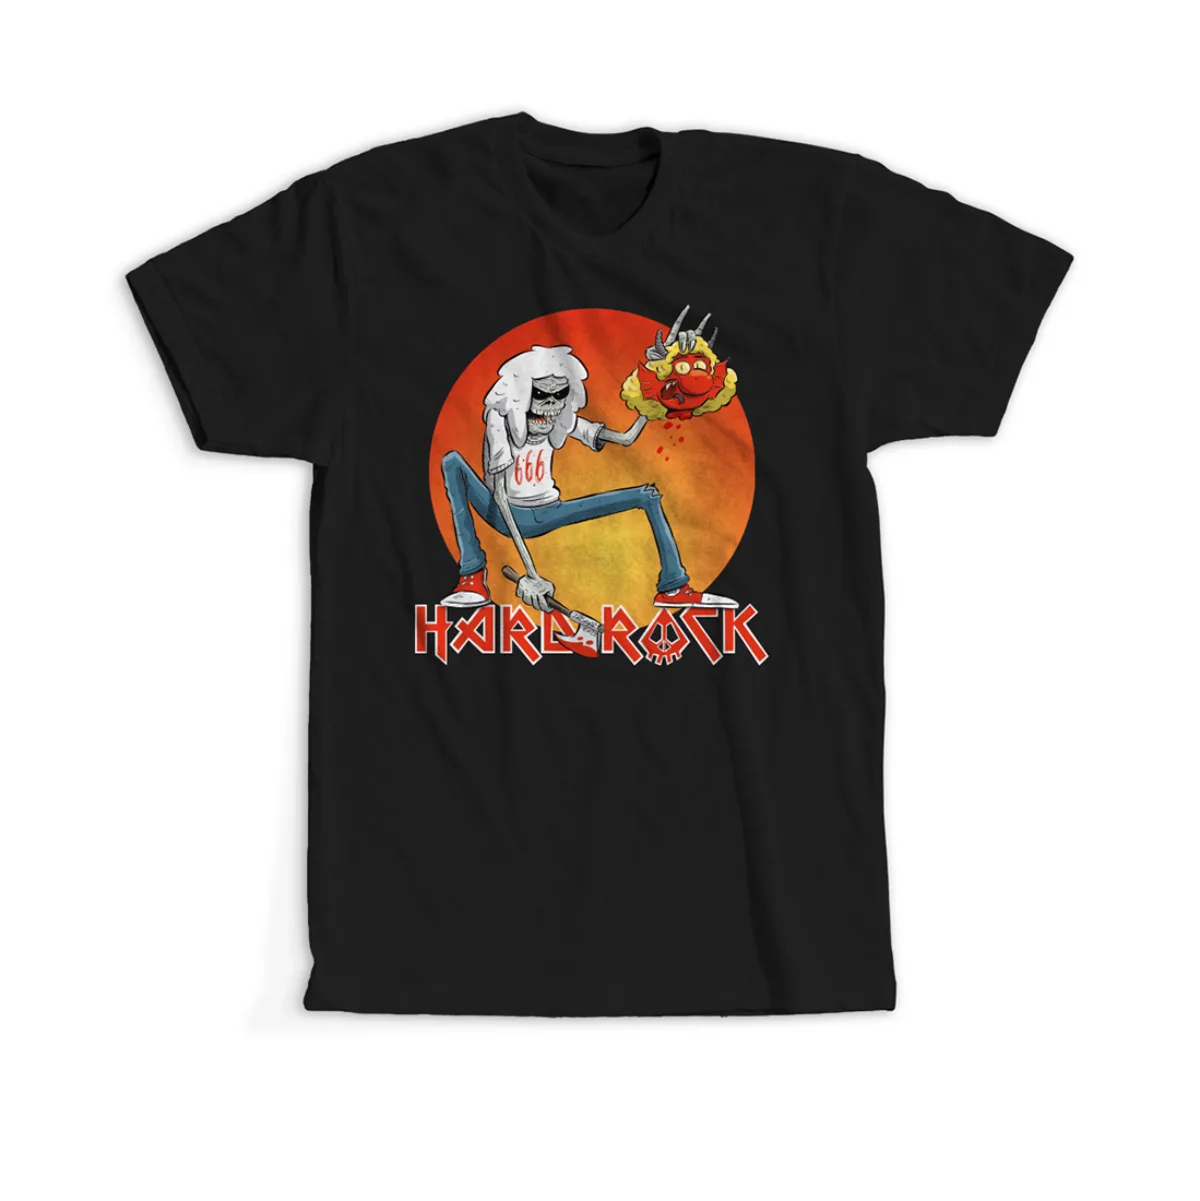 Hard Rock Maiden t-shirt